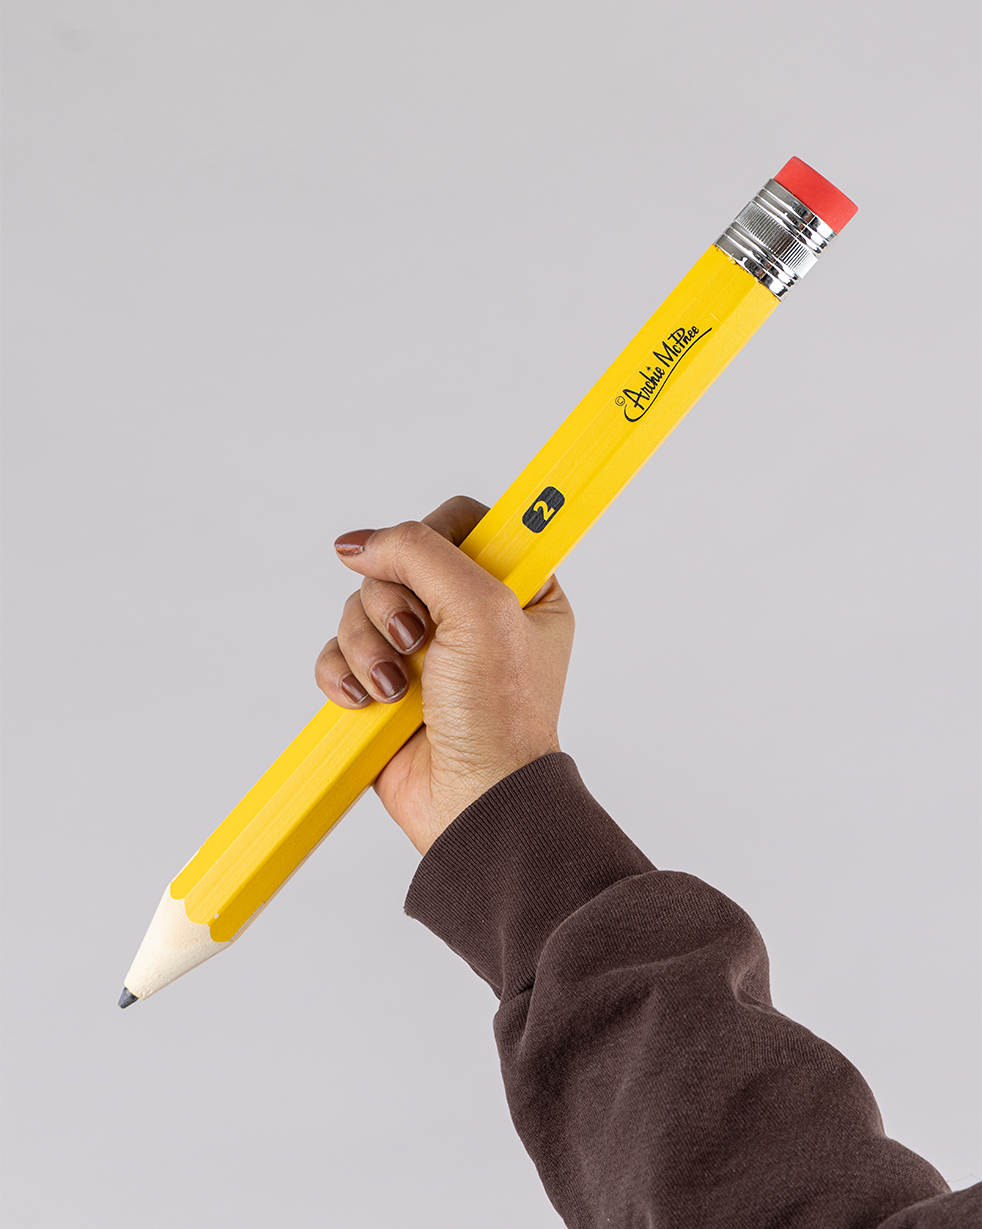 Giant Pencil